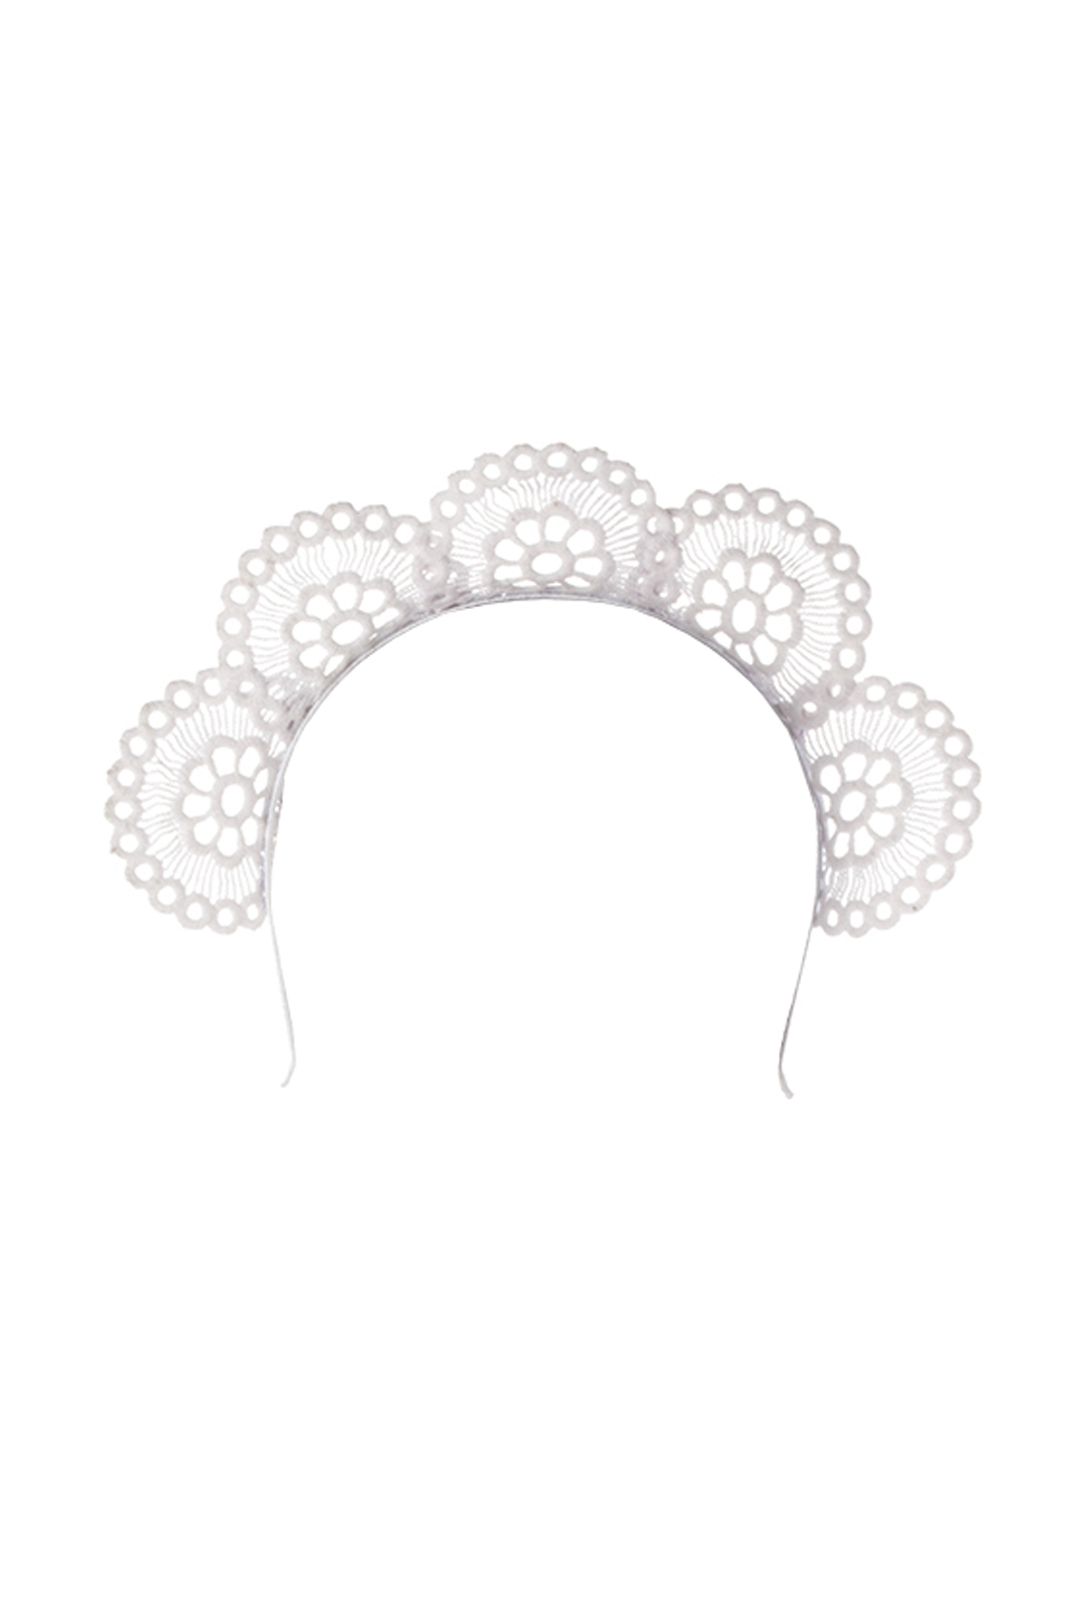 Olga Berg - Claire Lace Headband - White - Front